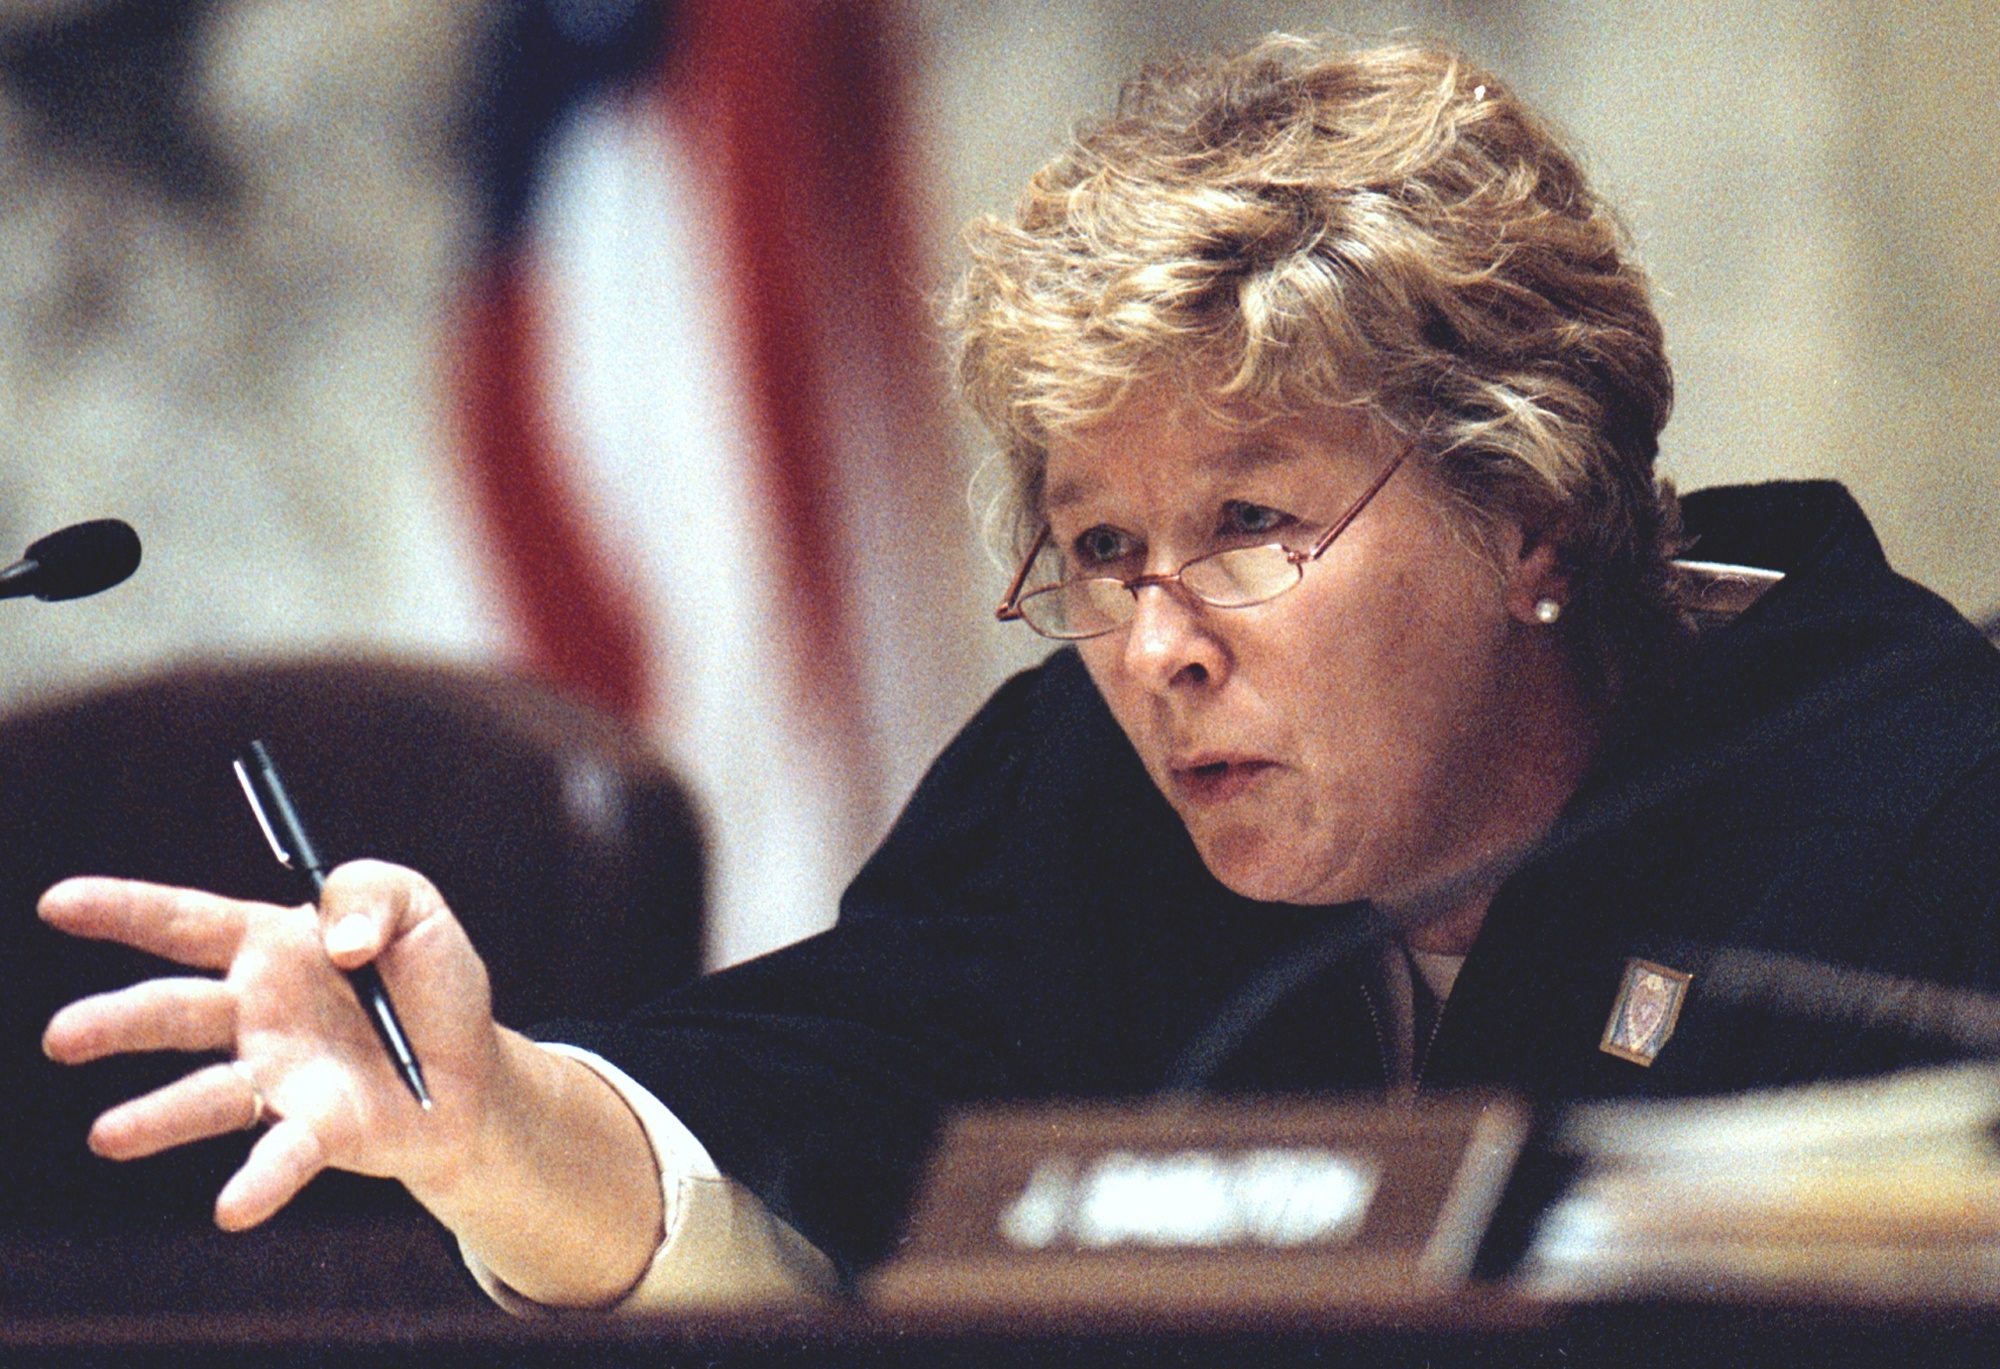 Justice Ann Walsh Bradley speaking during an oral argument in 2012